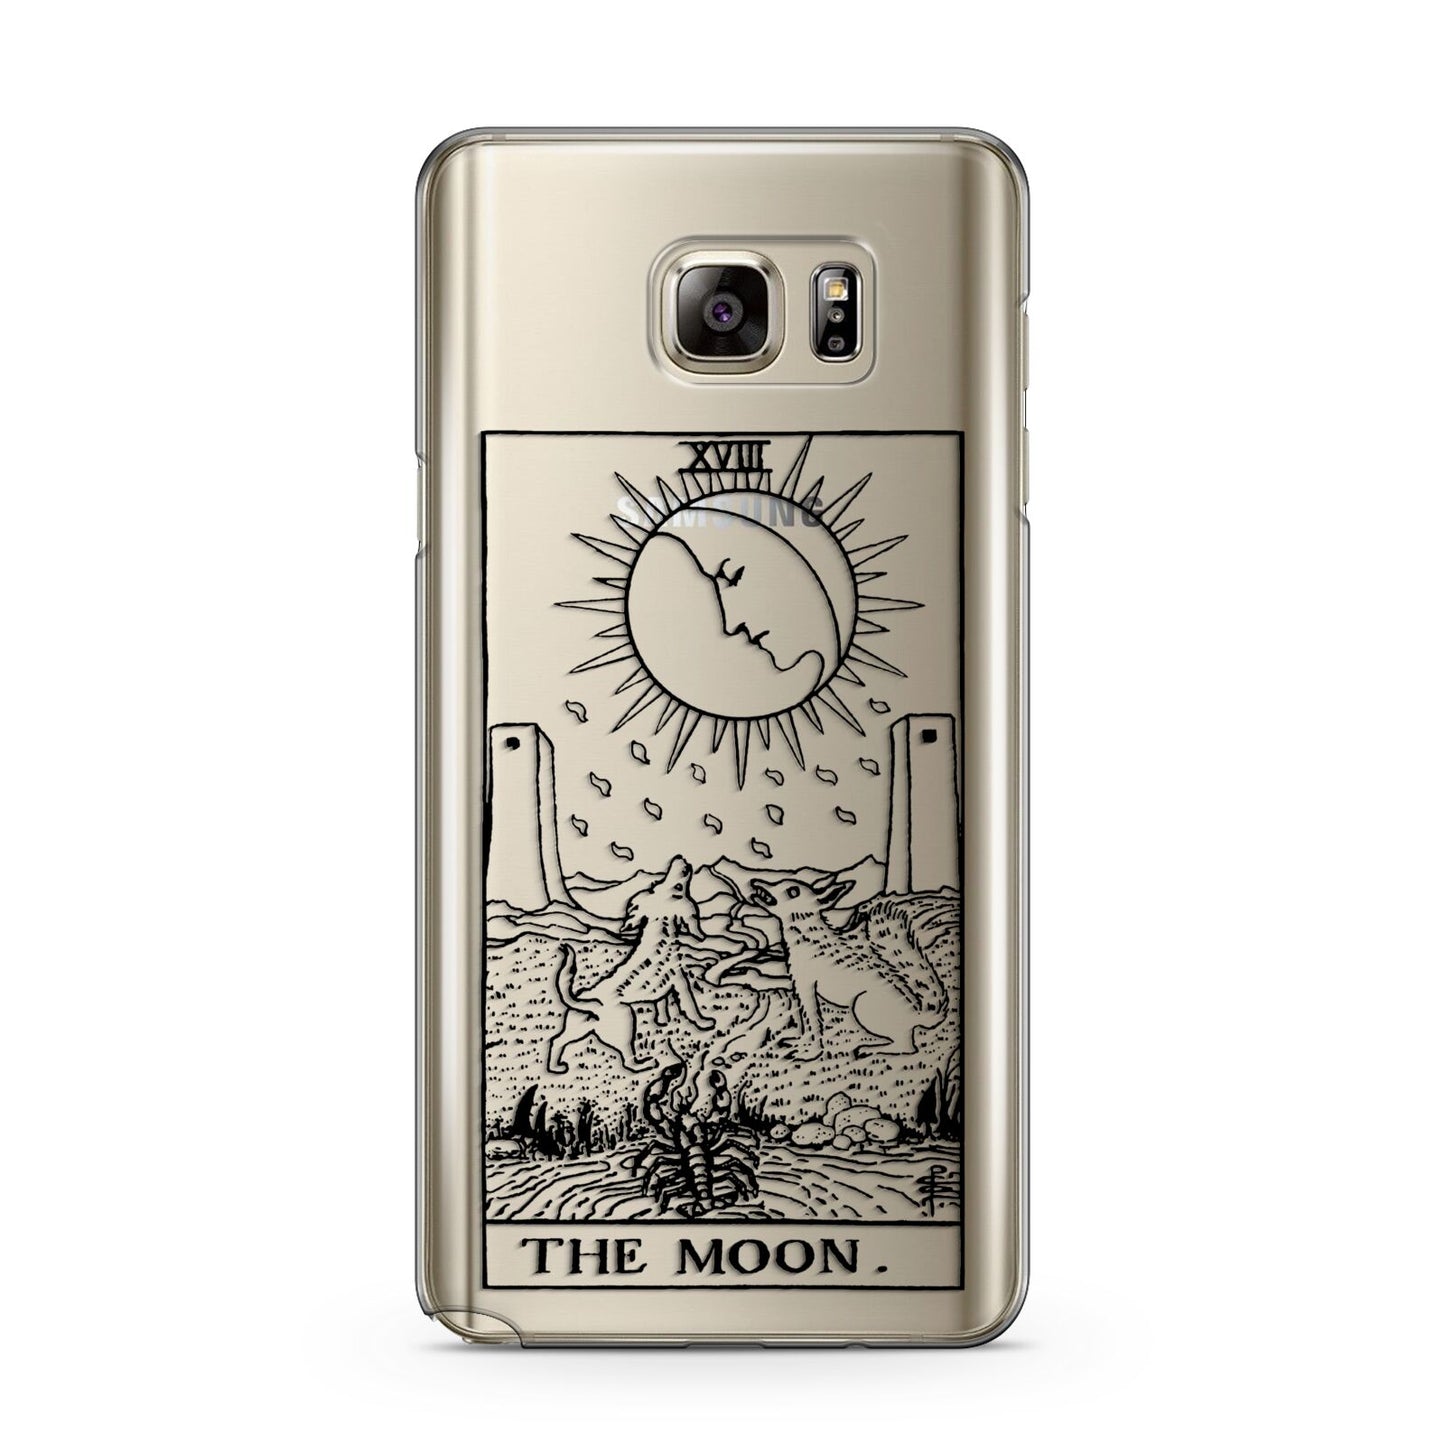 The Moon Monochrome Samsung Galaxy Note 5 Case